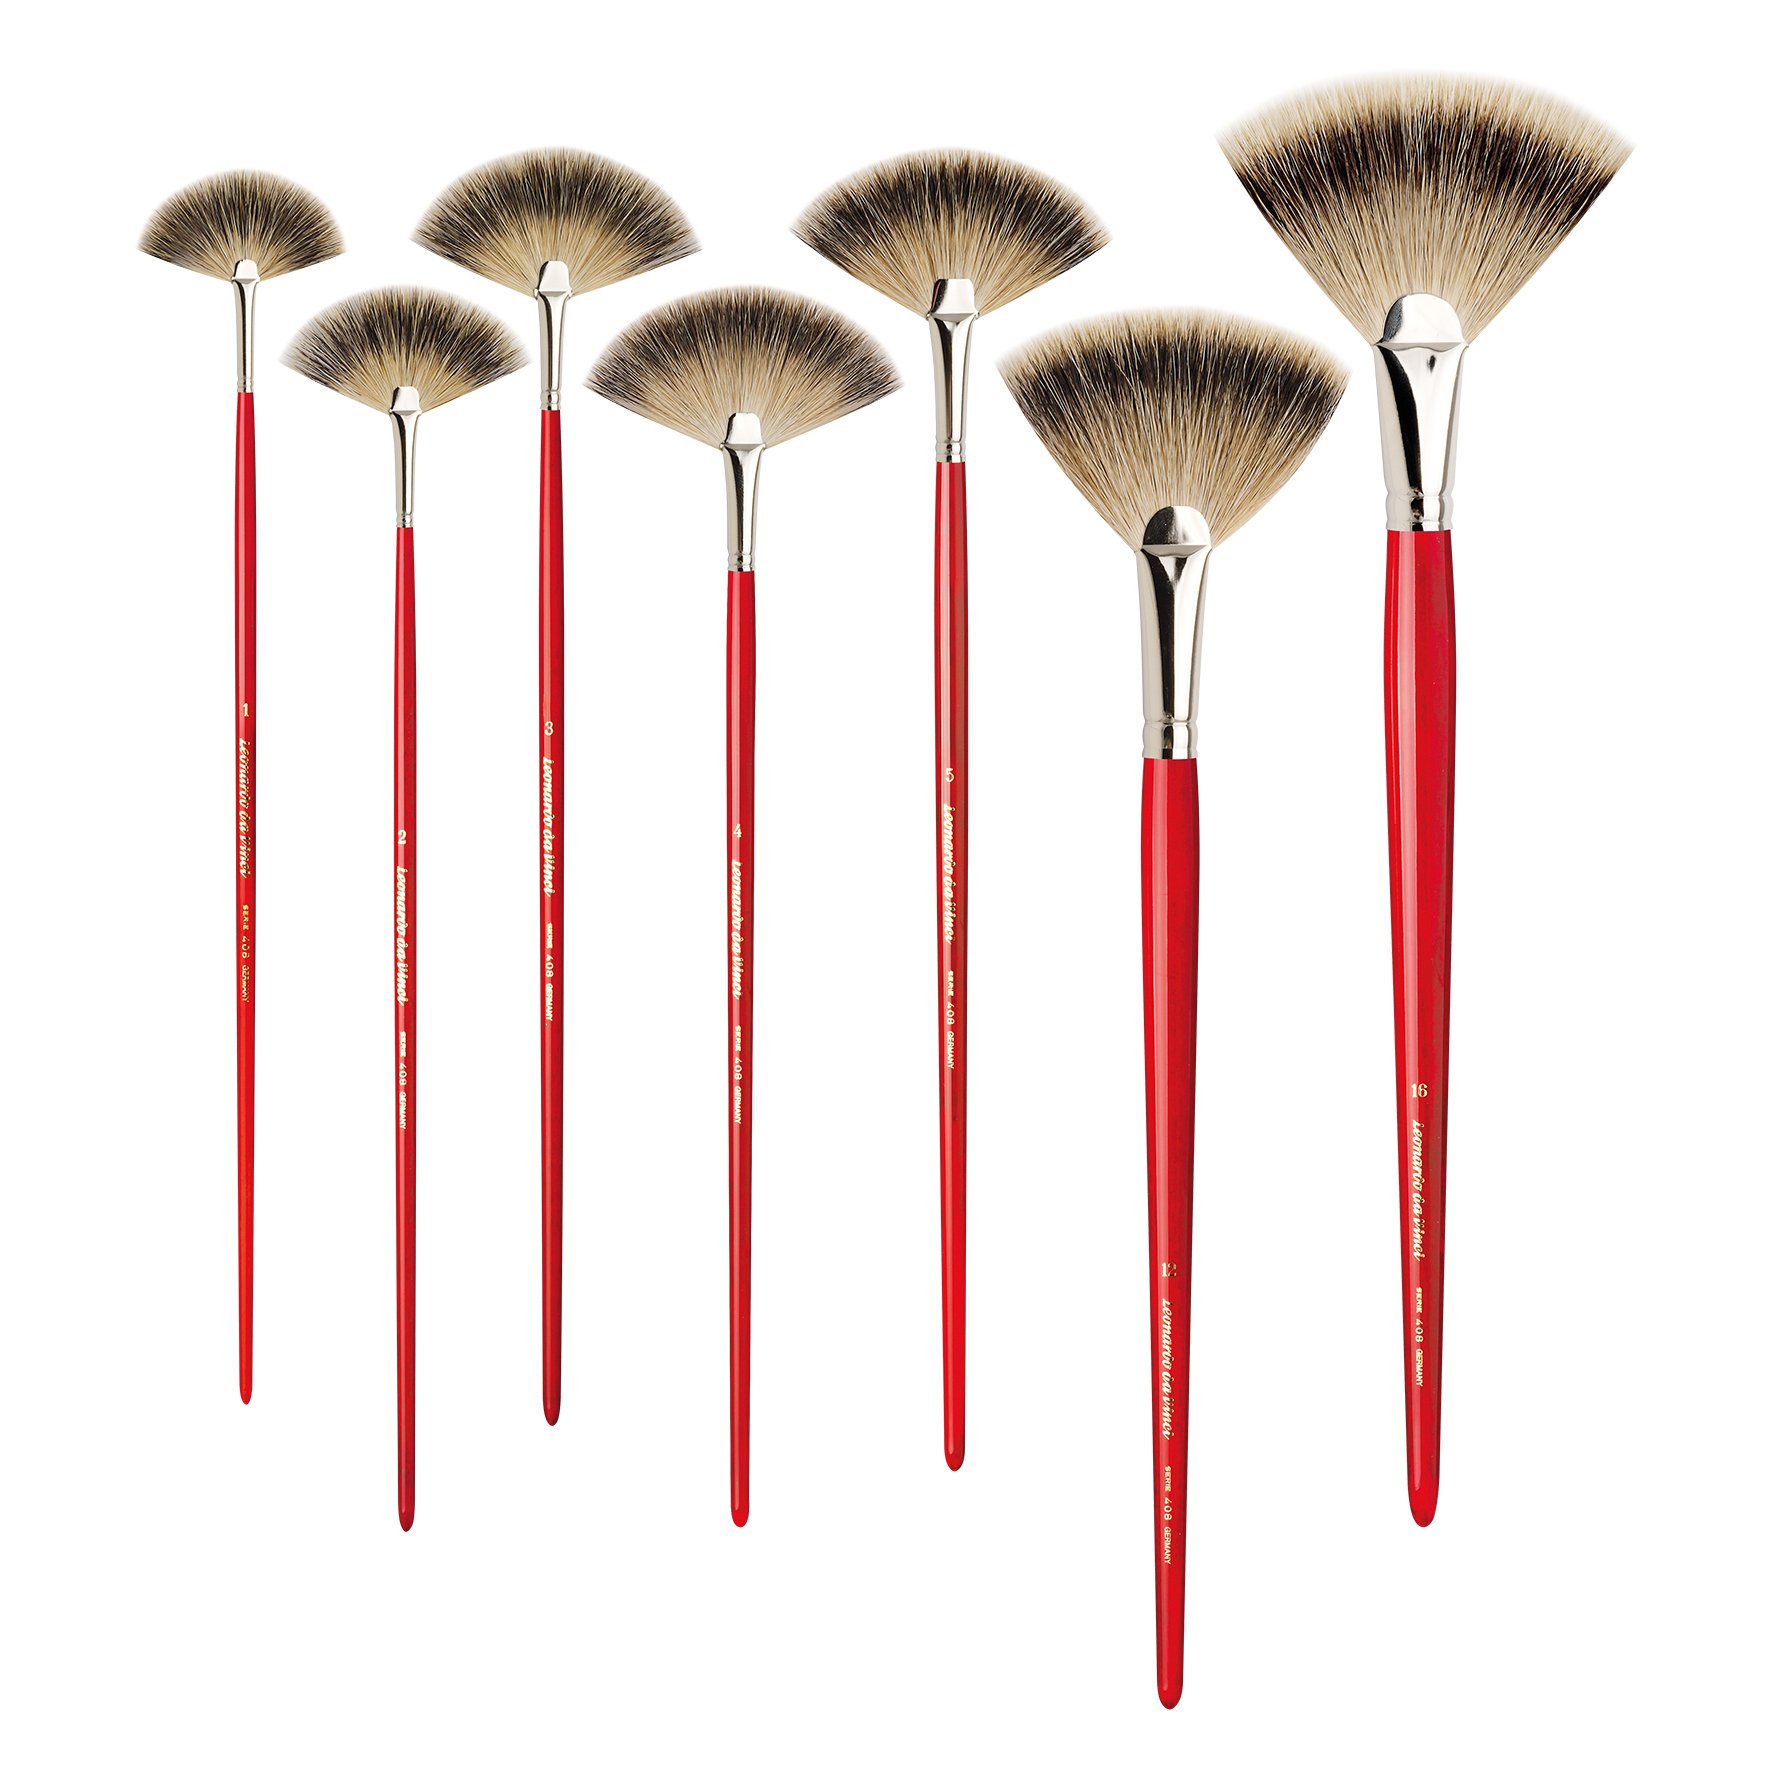 DaVinci Badger Fan Brushes Series 40 - Size 5